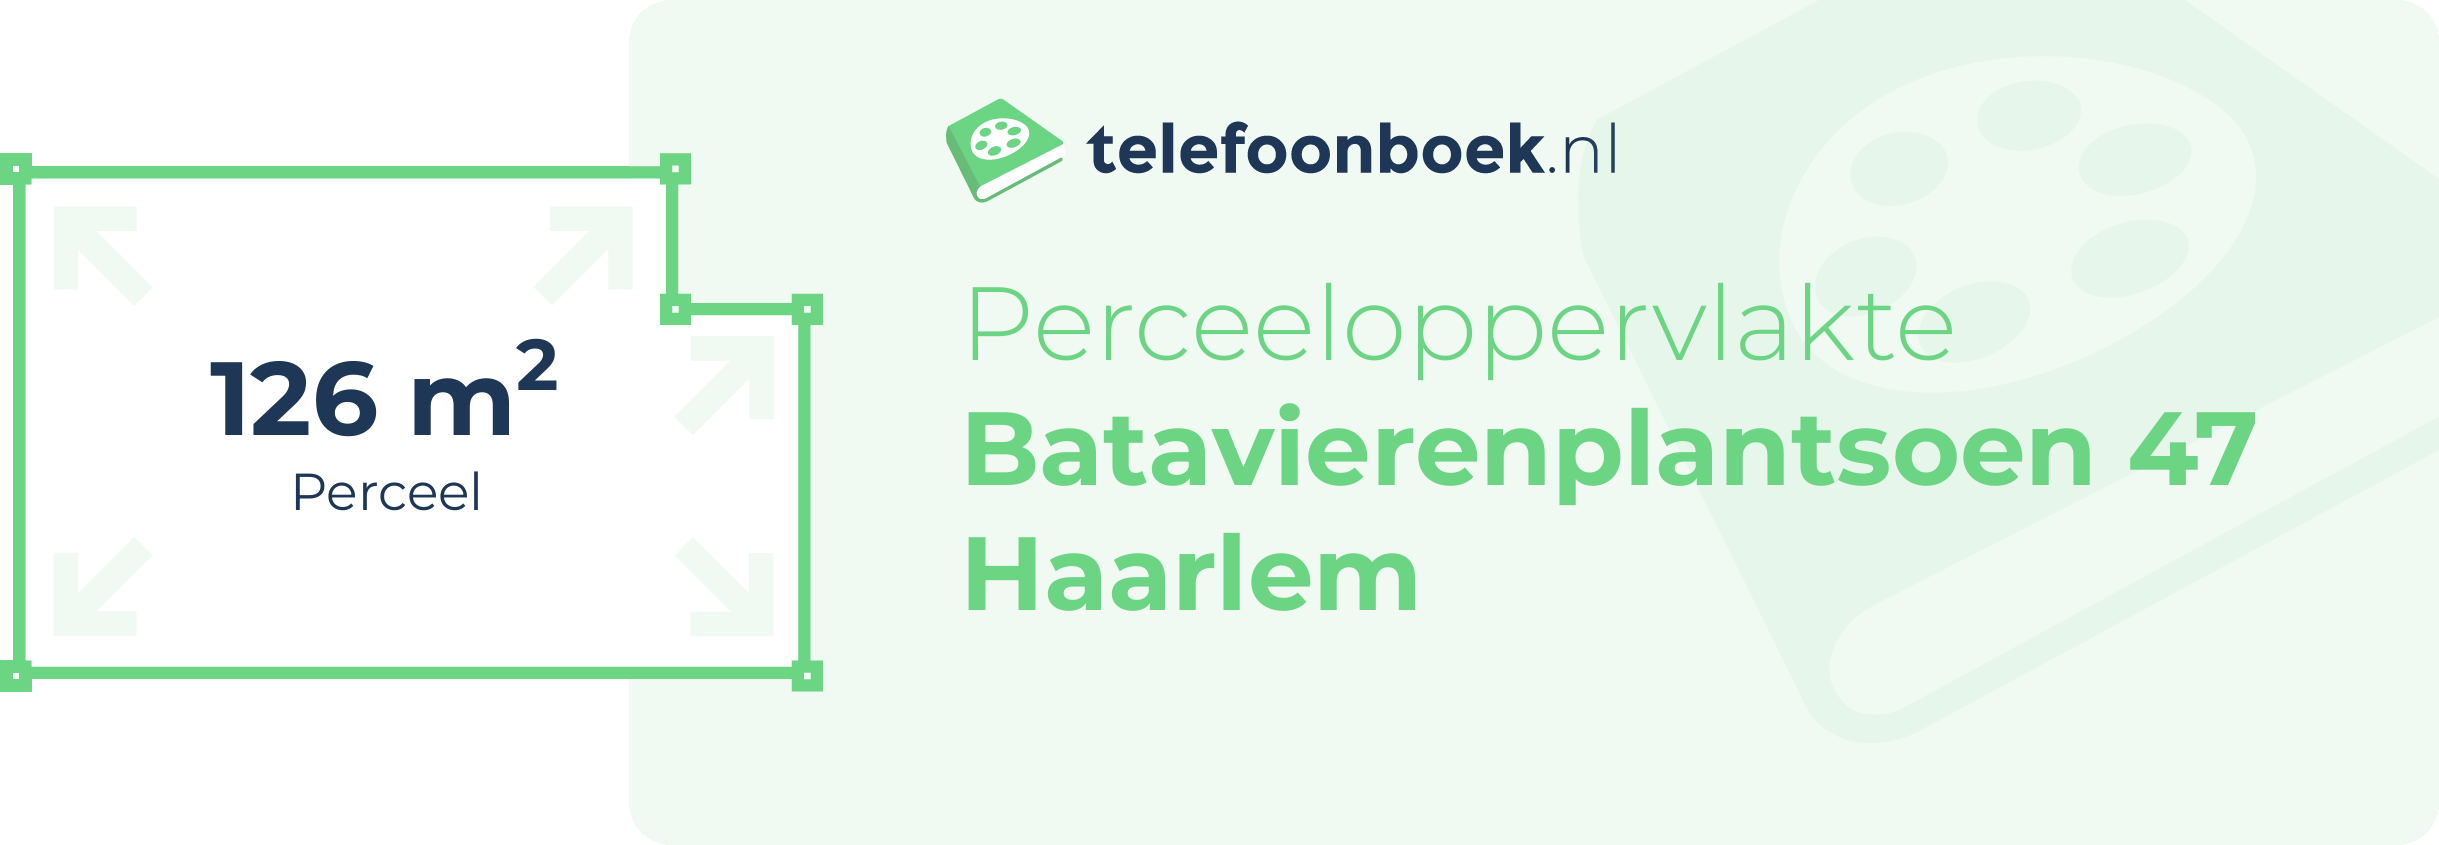 Perceeloppervlakte Batavierenplantsoen 47 Haarlem